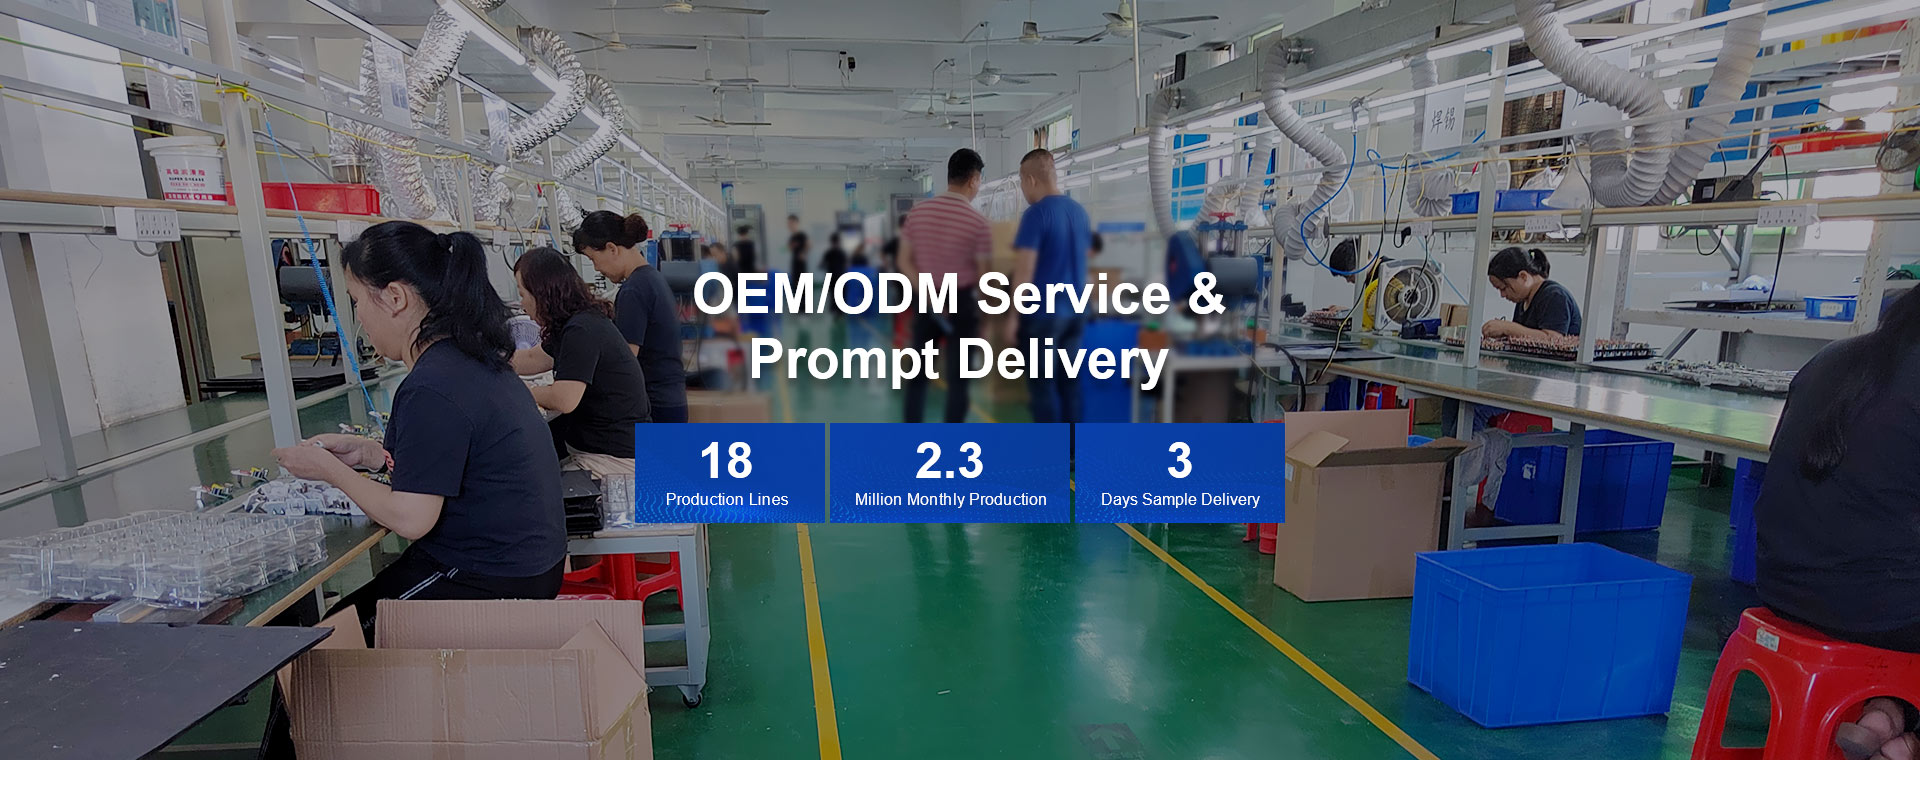 OEM/ODM Service & Prompt Delivery